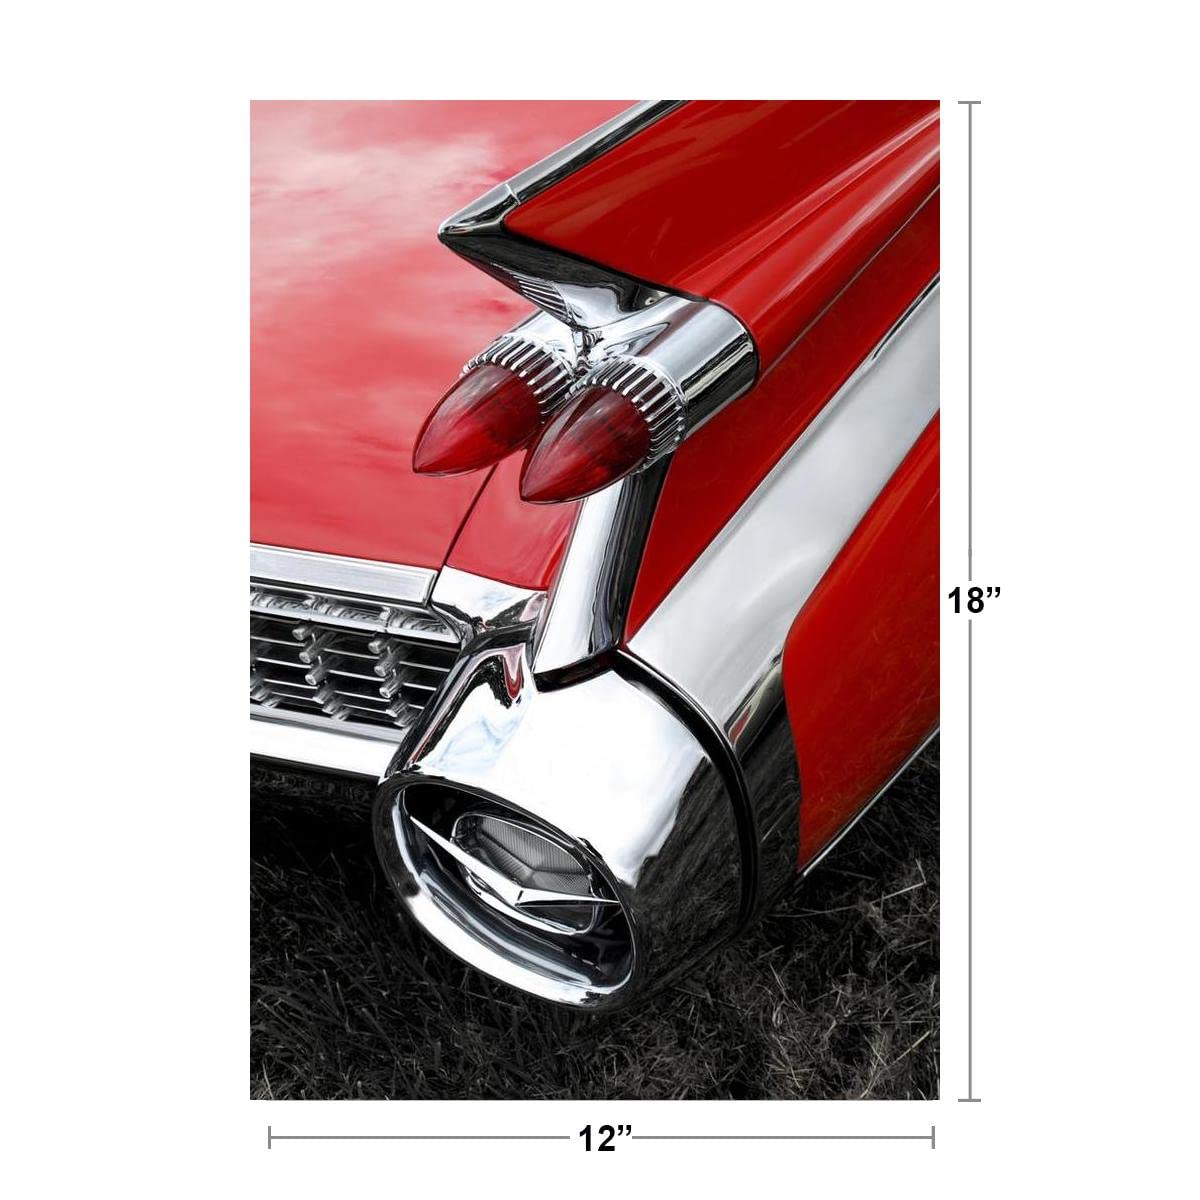 1959 Red Cadillac Eldorado Tail Fin and Light Photo Photograph Cool Wall Decor Art Print Poster 12x18